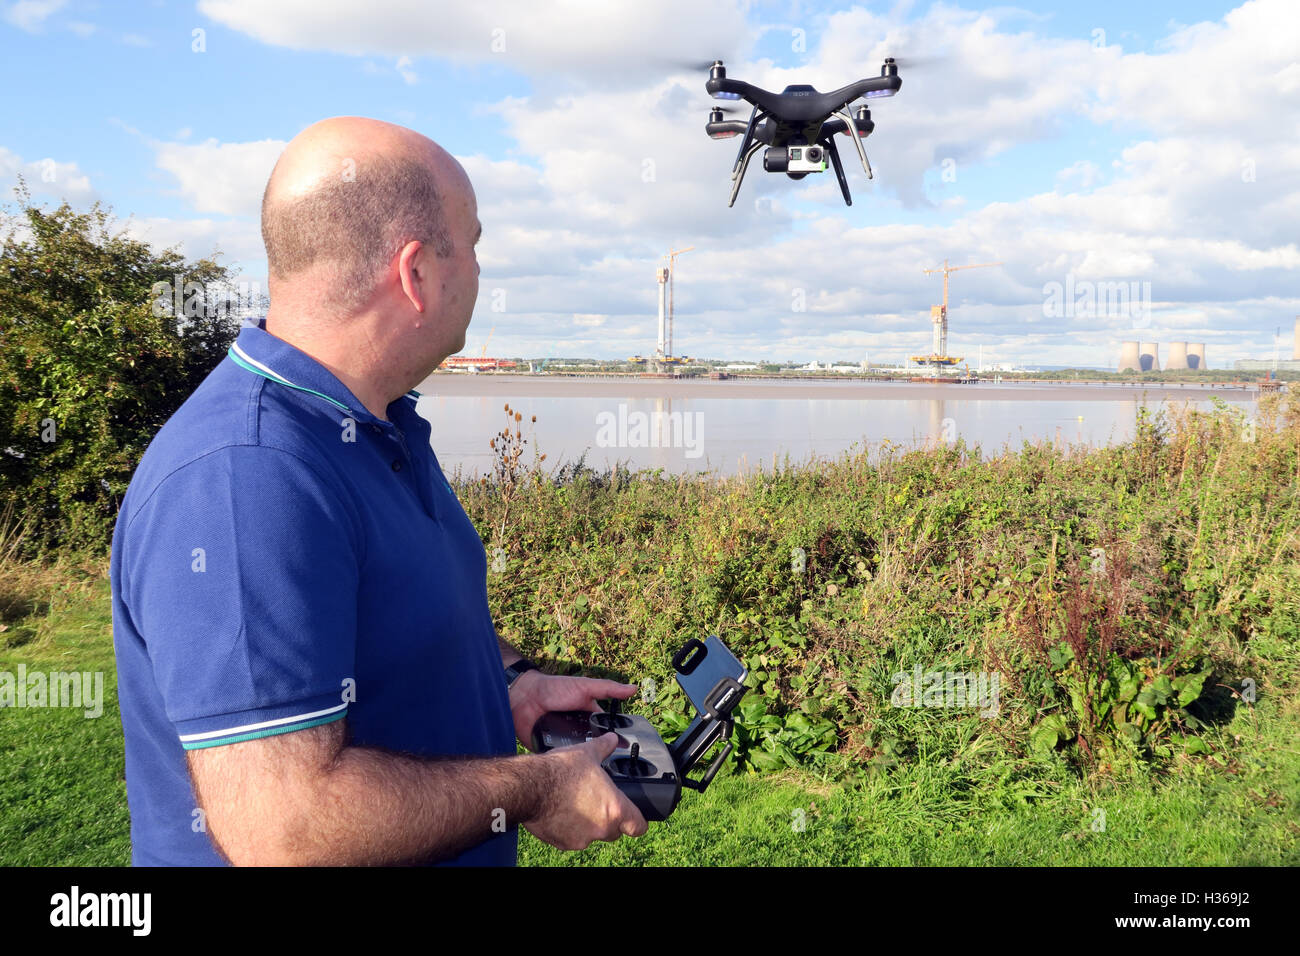 Man flying 3DR RTF X8 drone, near River Mersey, Runcorn, Merseyside, England, UK Stock Photo